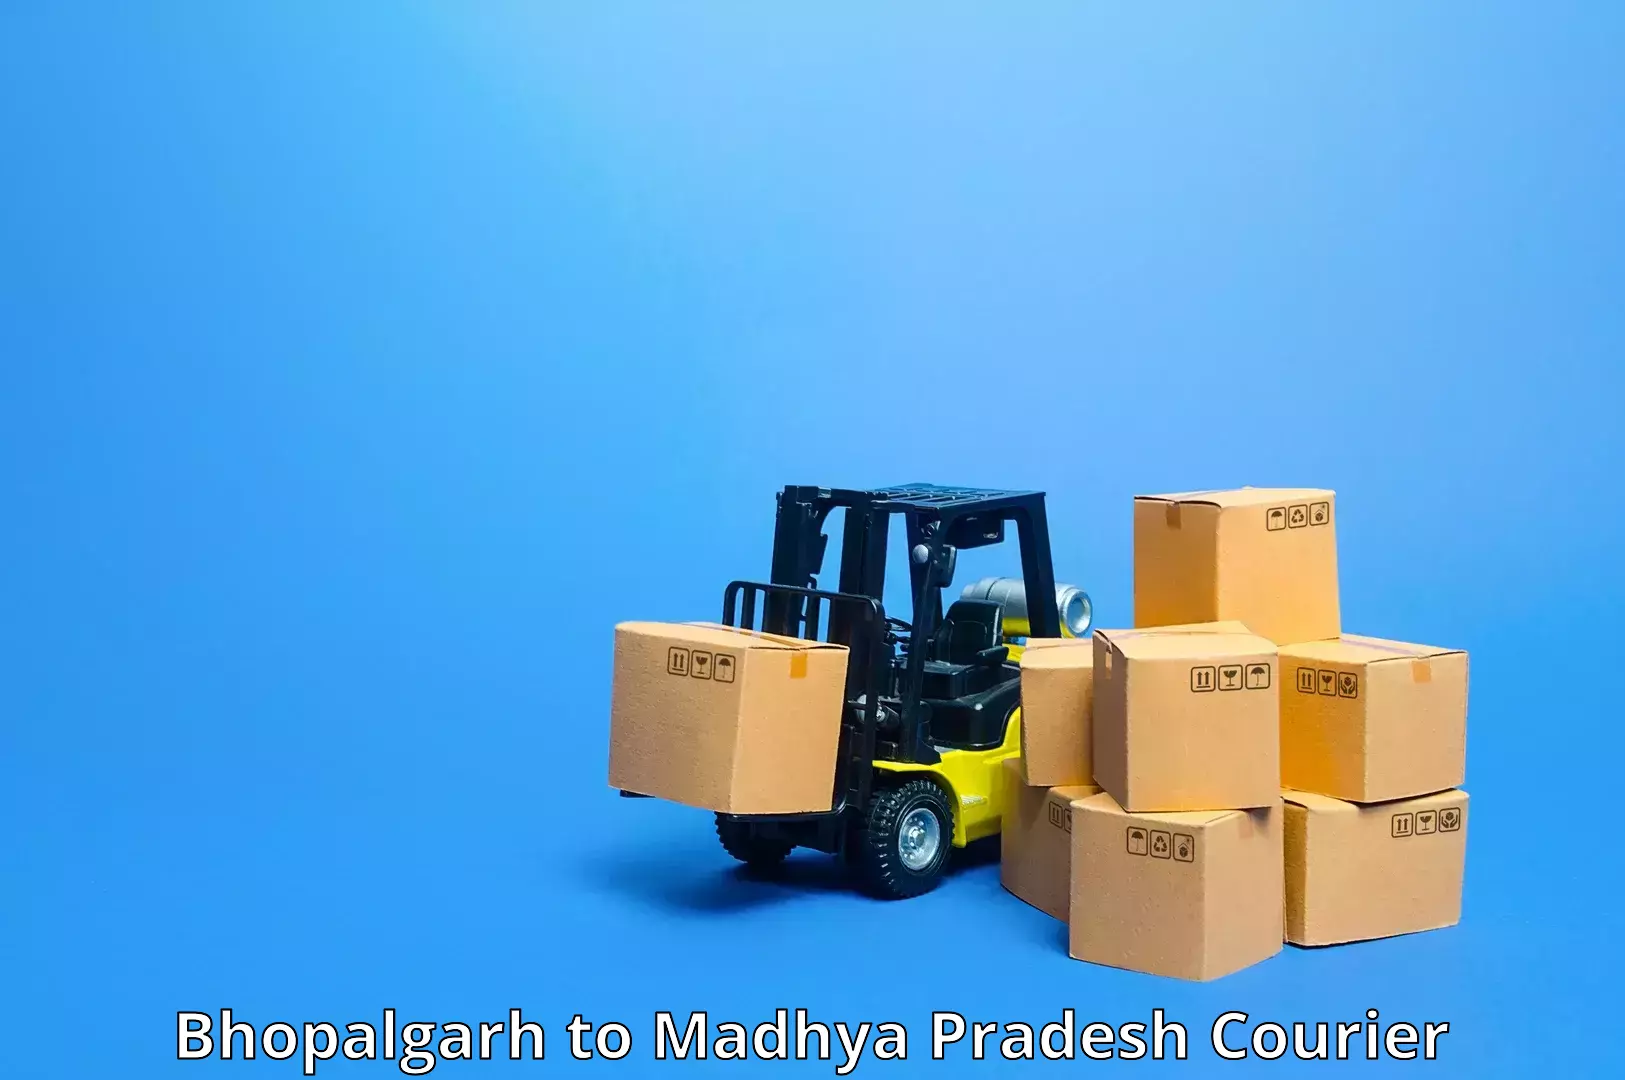 Smart shipping technology Bhopalgarh to Chhindwara